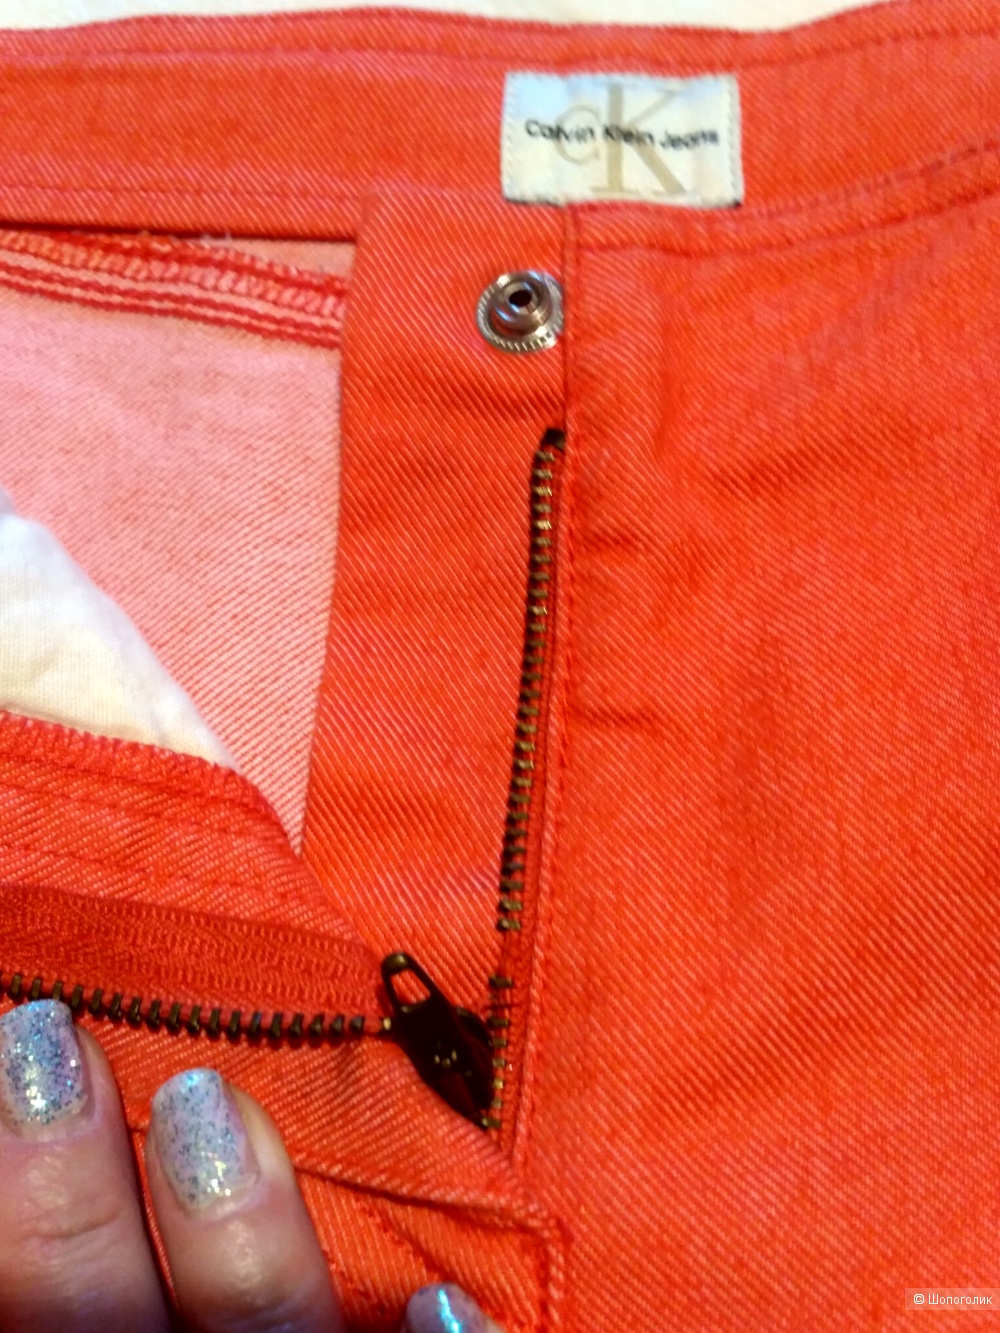 Джинсы CK CELVIN KLEIN jeans 29 маркировка маломерят